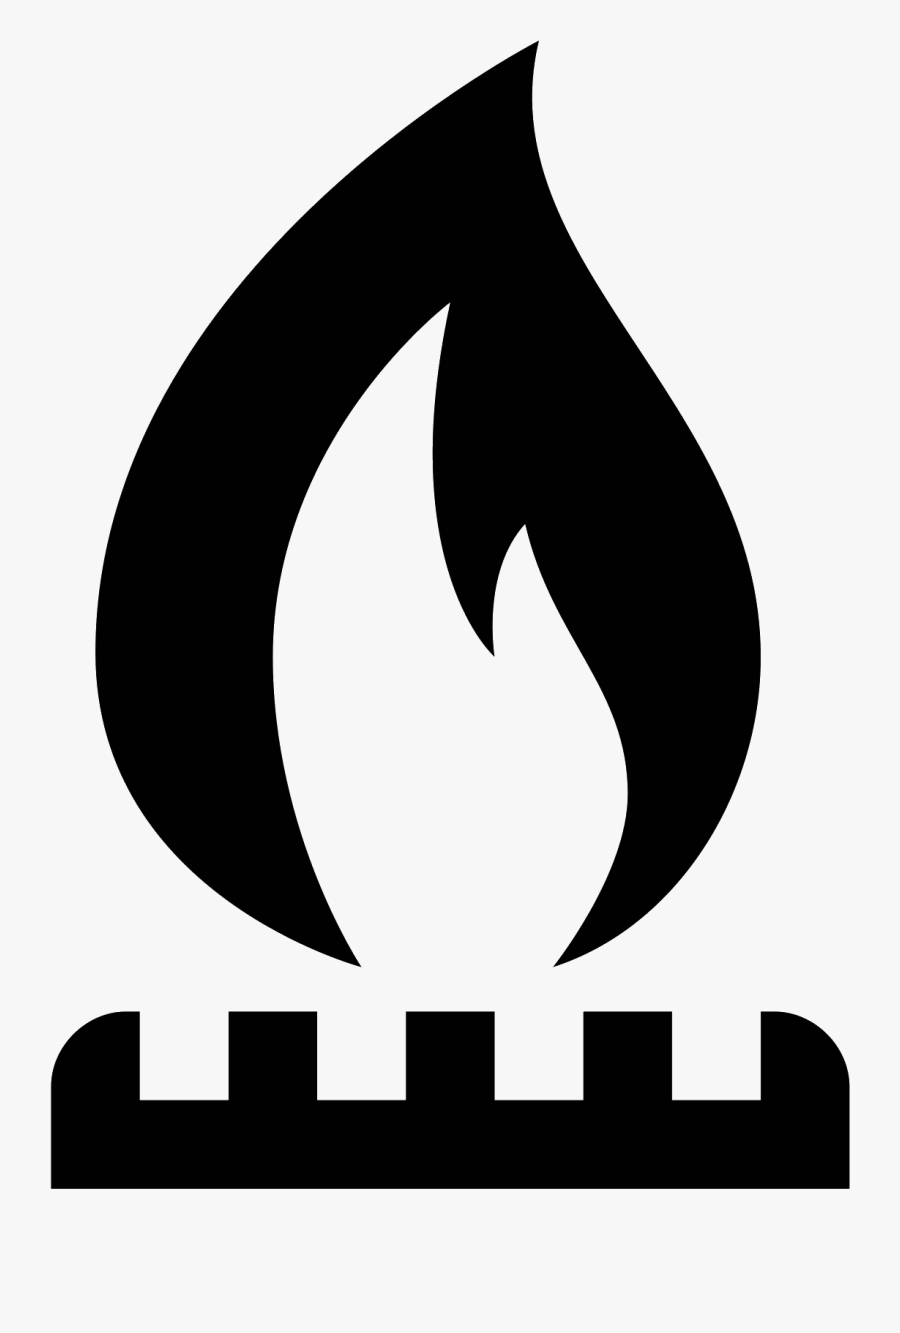 Industria Icono Descarga Gratuita - Natural Gas Icon Png, Transparent Clipart